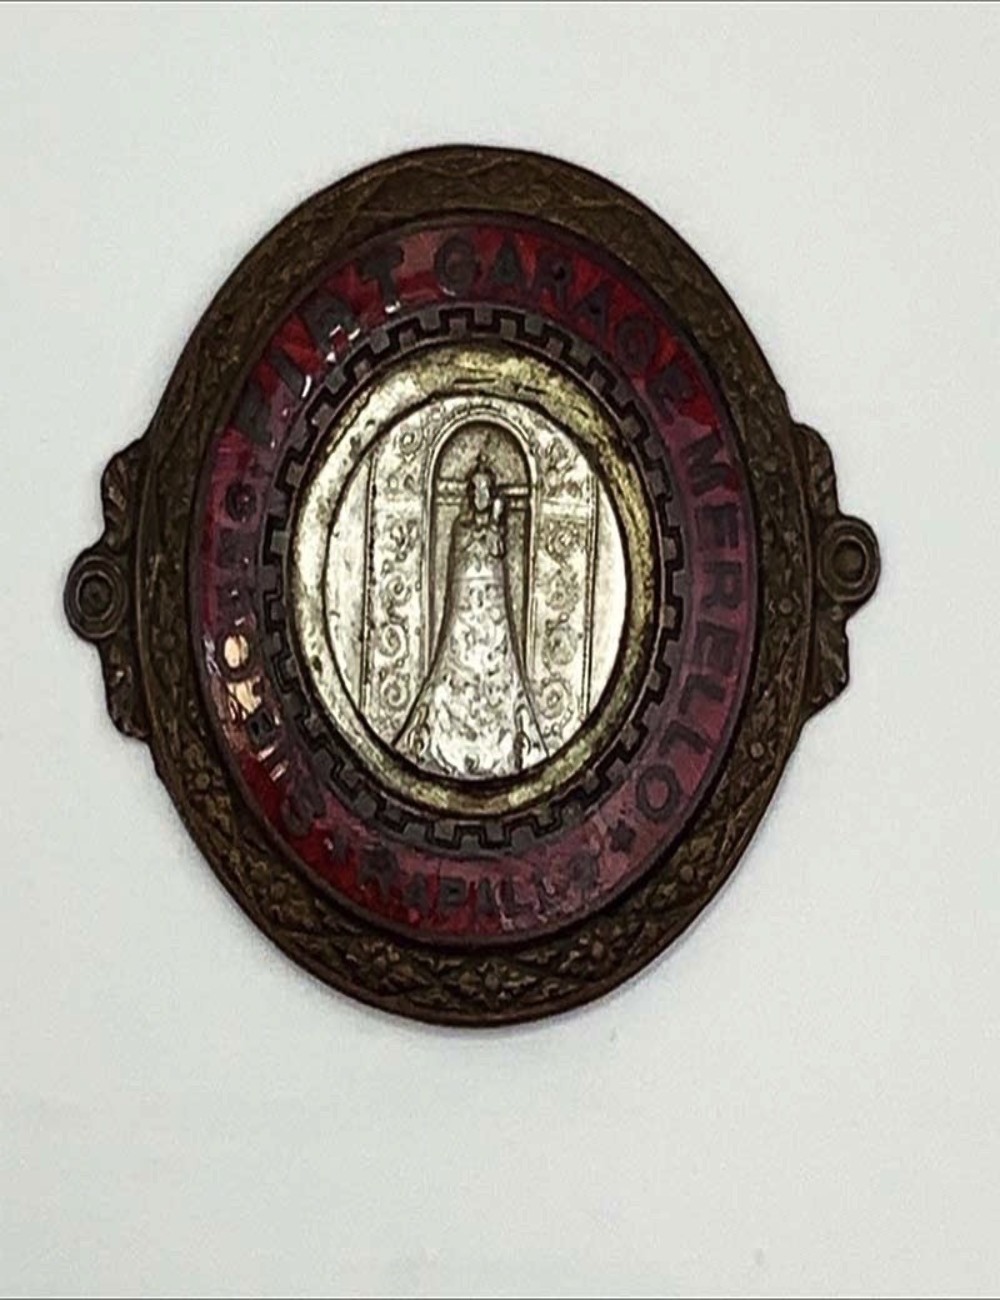 San Cristoforo plaque. Dimensions 4,8cm x 5,7cm